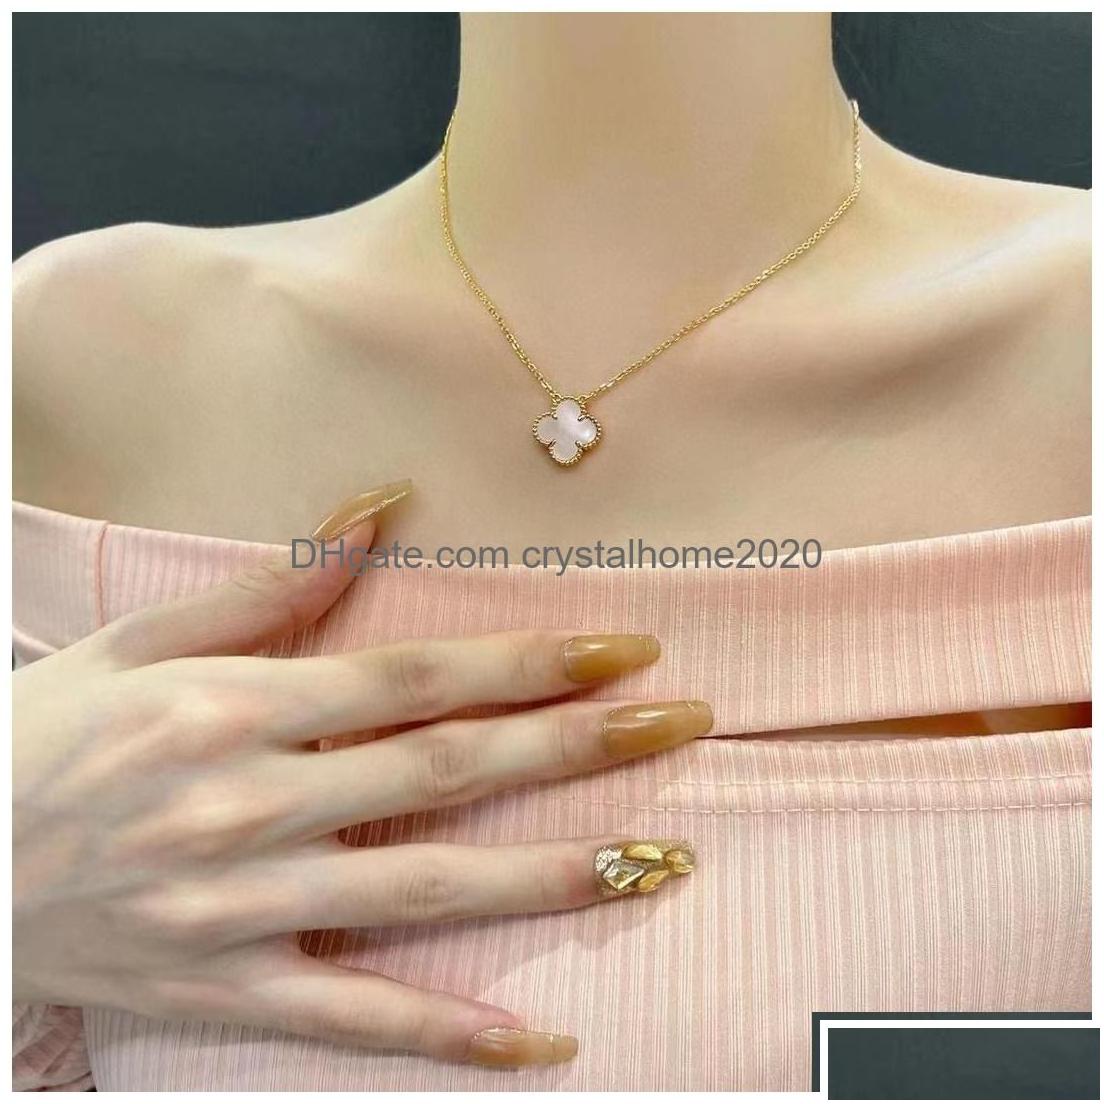 pendant necklaces luxury va brand clover designer gold black blue white pink red green stone sweet flower 15mm 4 le dhcv9